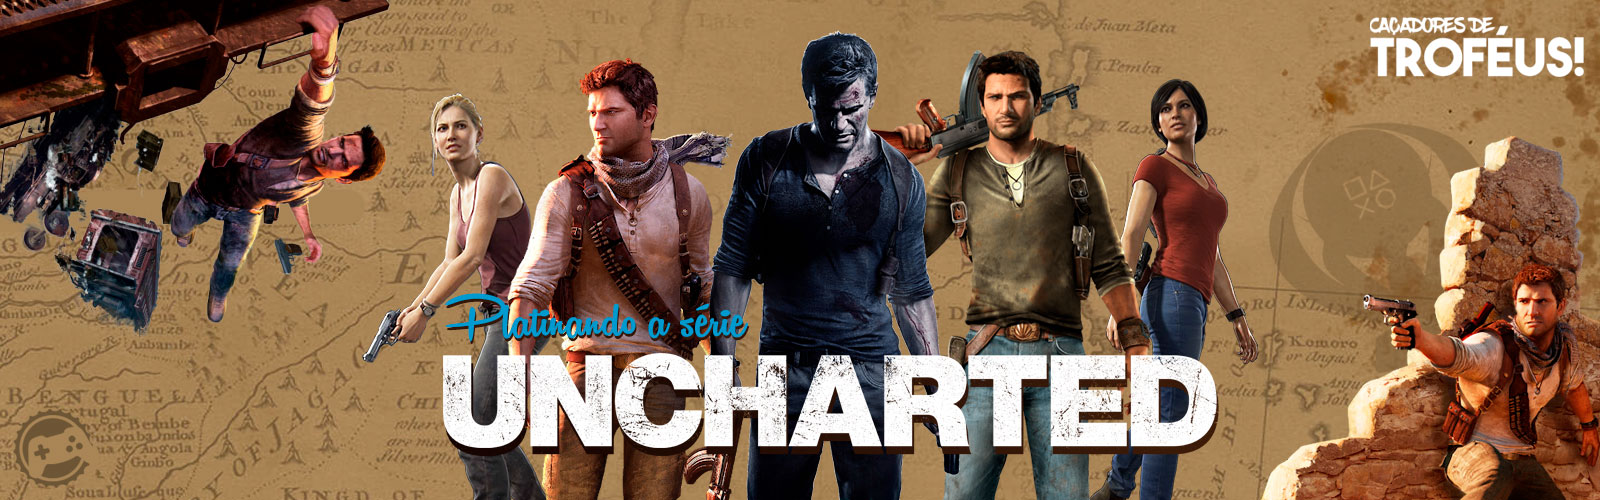 Platinando a série Uncharted! Cover